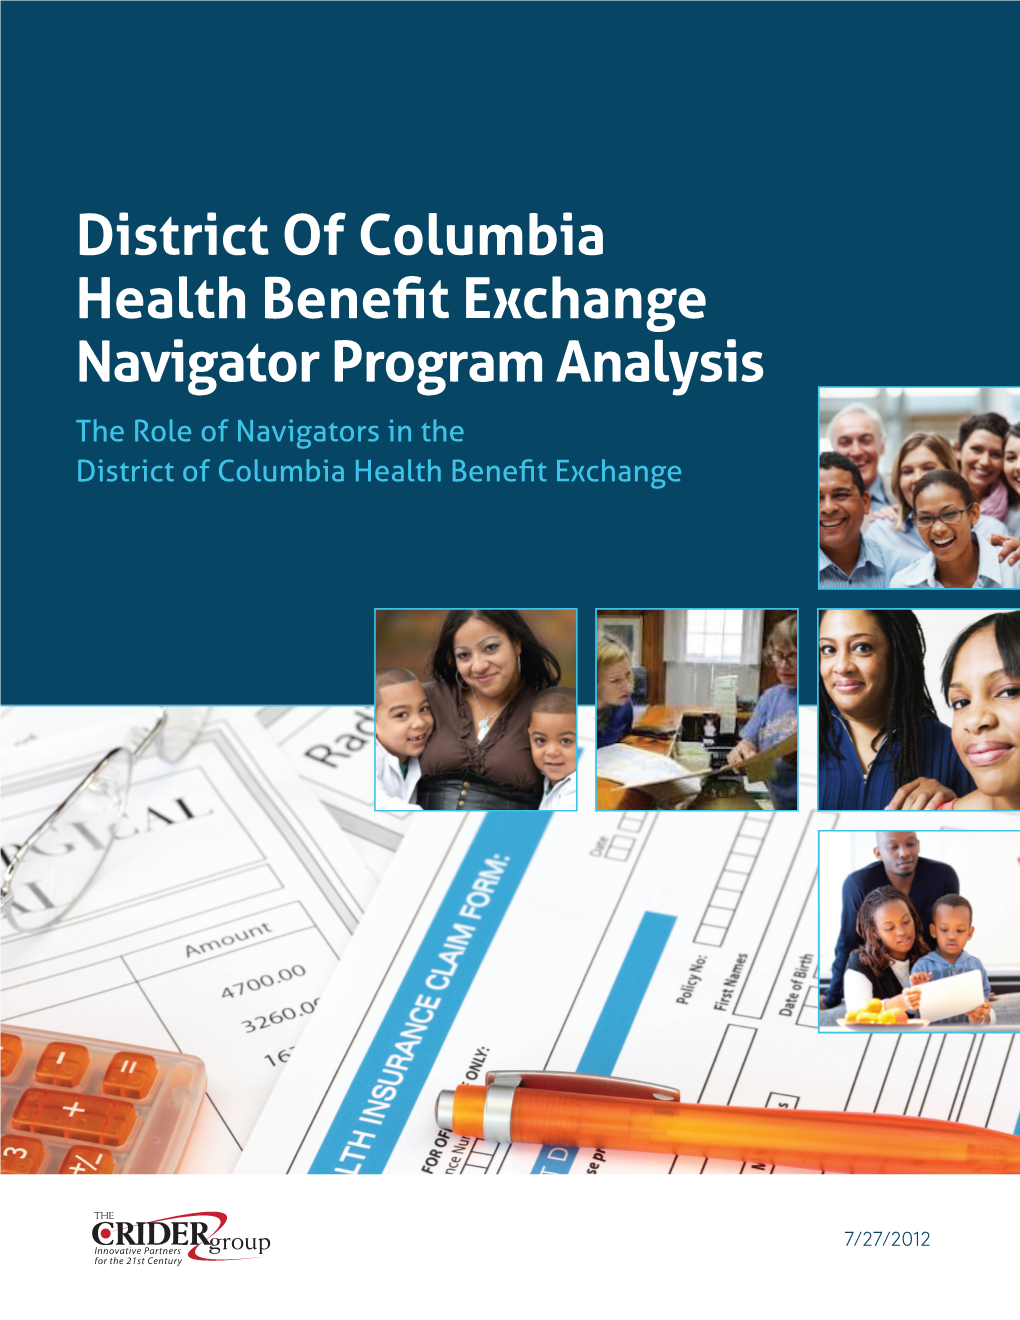 District of Columbia Health Benefit Exchange Navigator Program Analysis the Role of Navigators in the District of Columbia Health Benefit Exchange